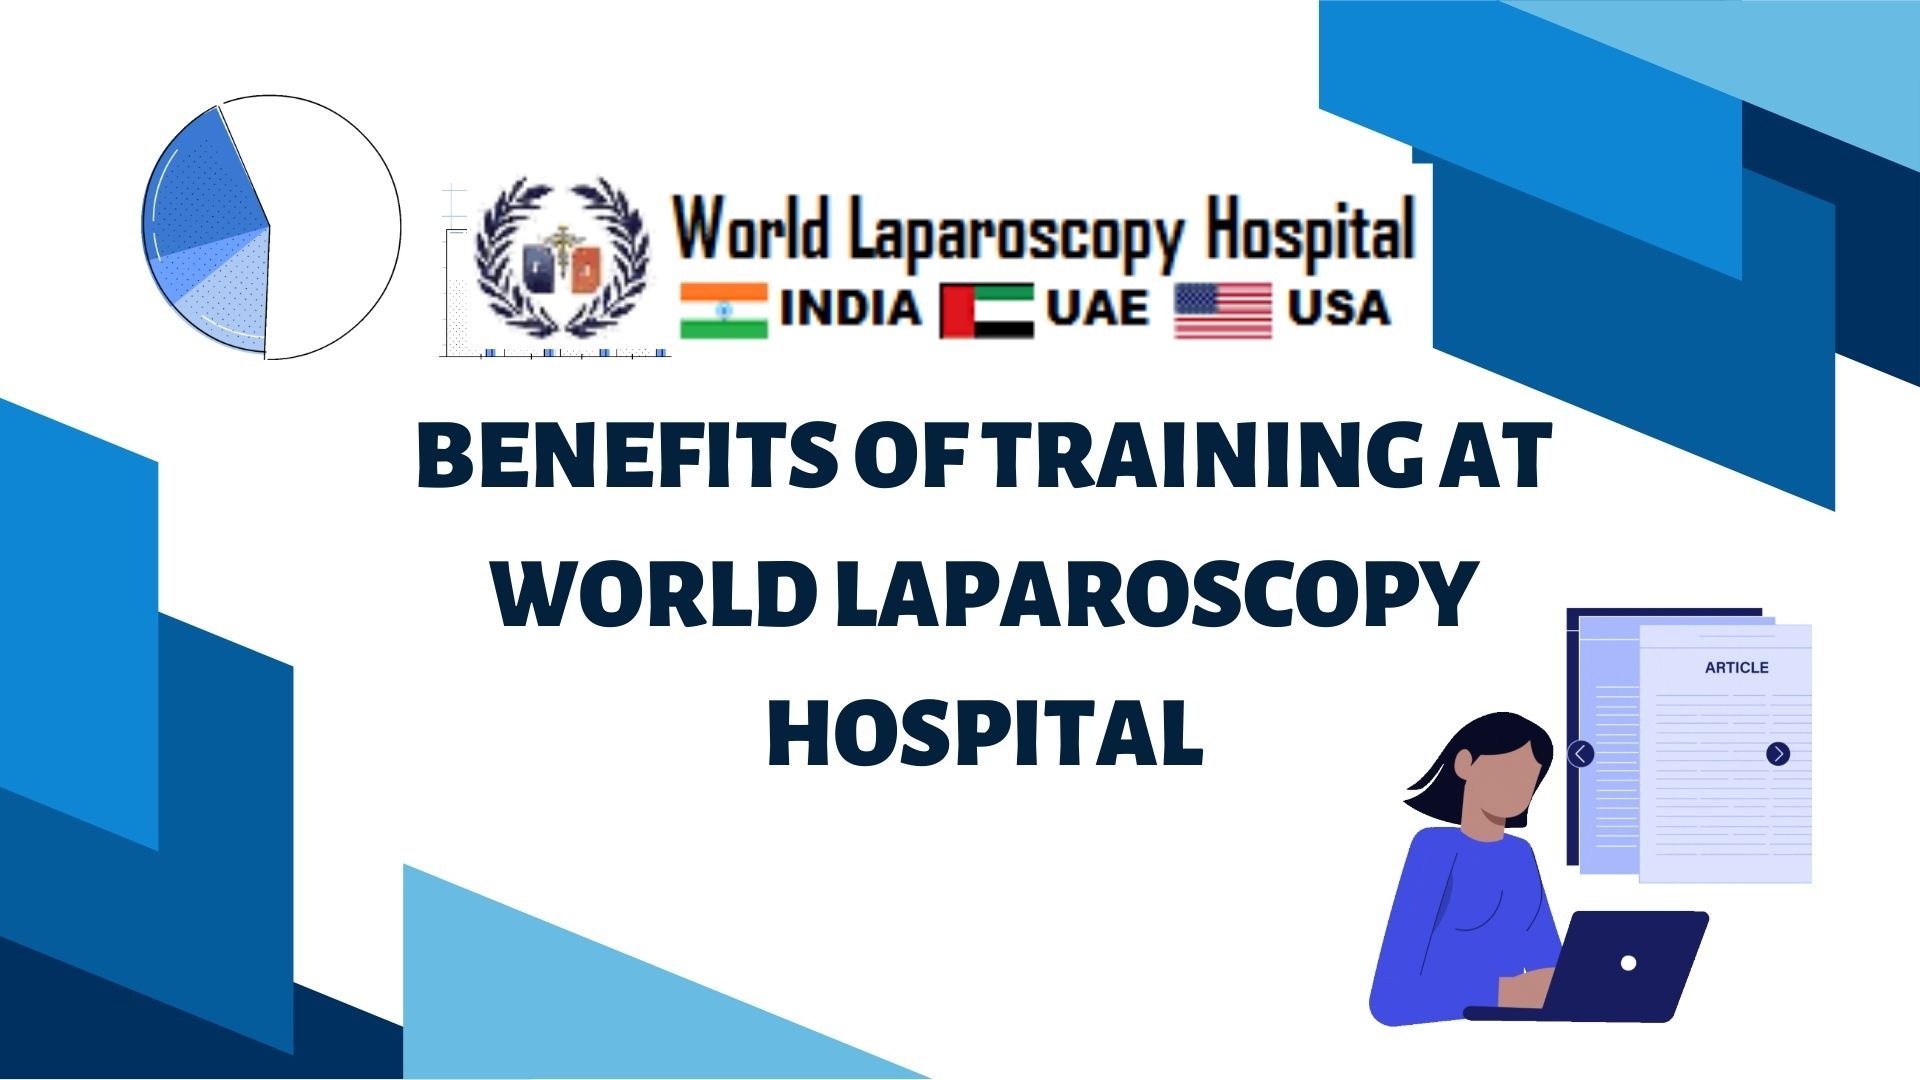 Benefit of Training at World Laparoscopy Hospital